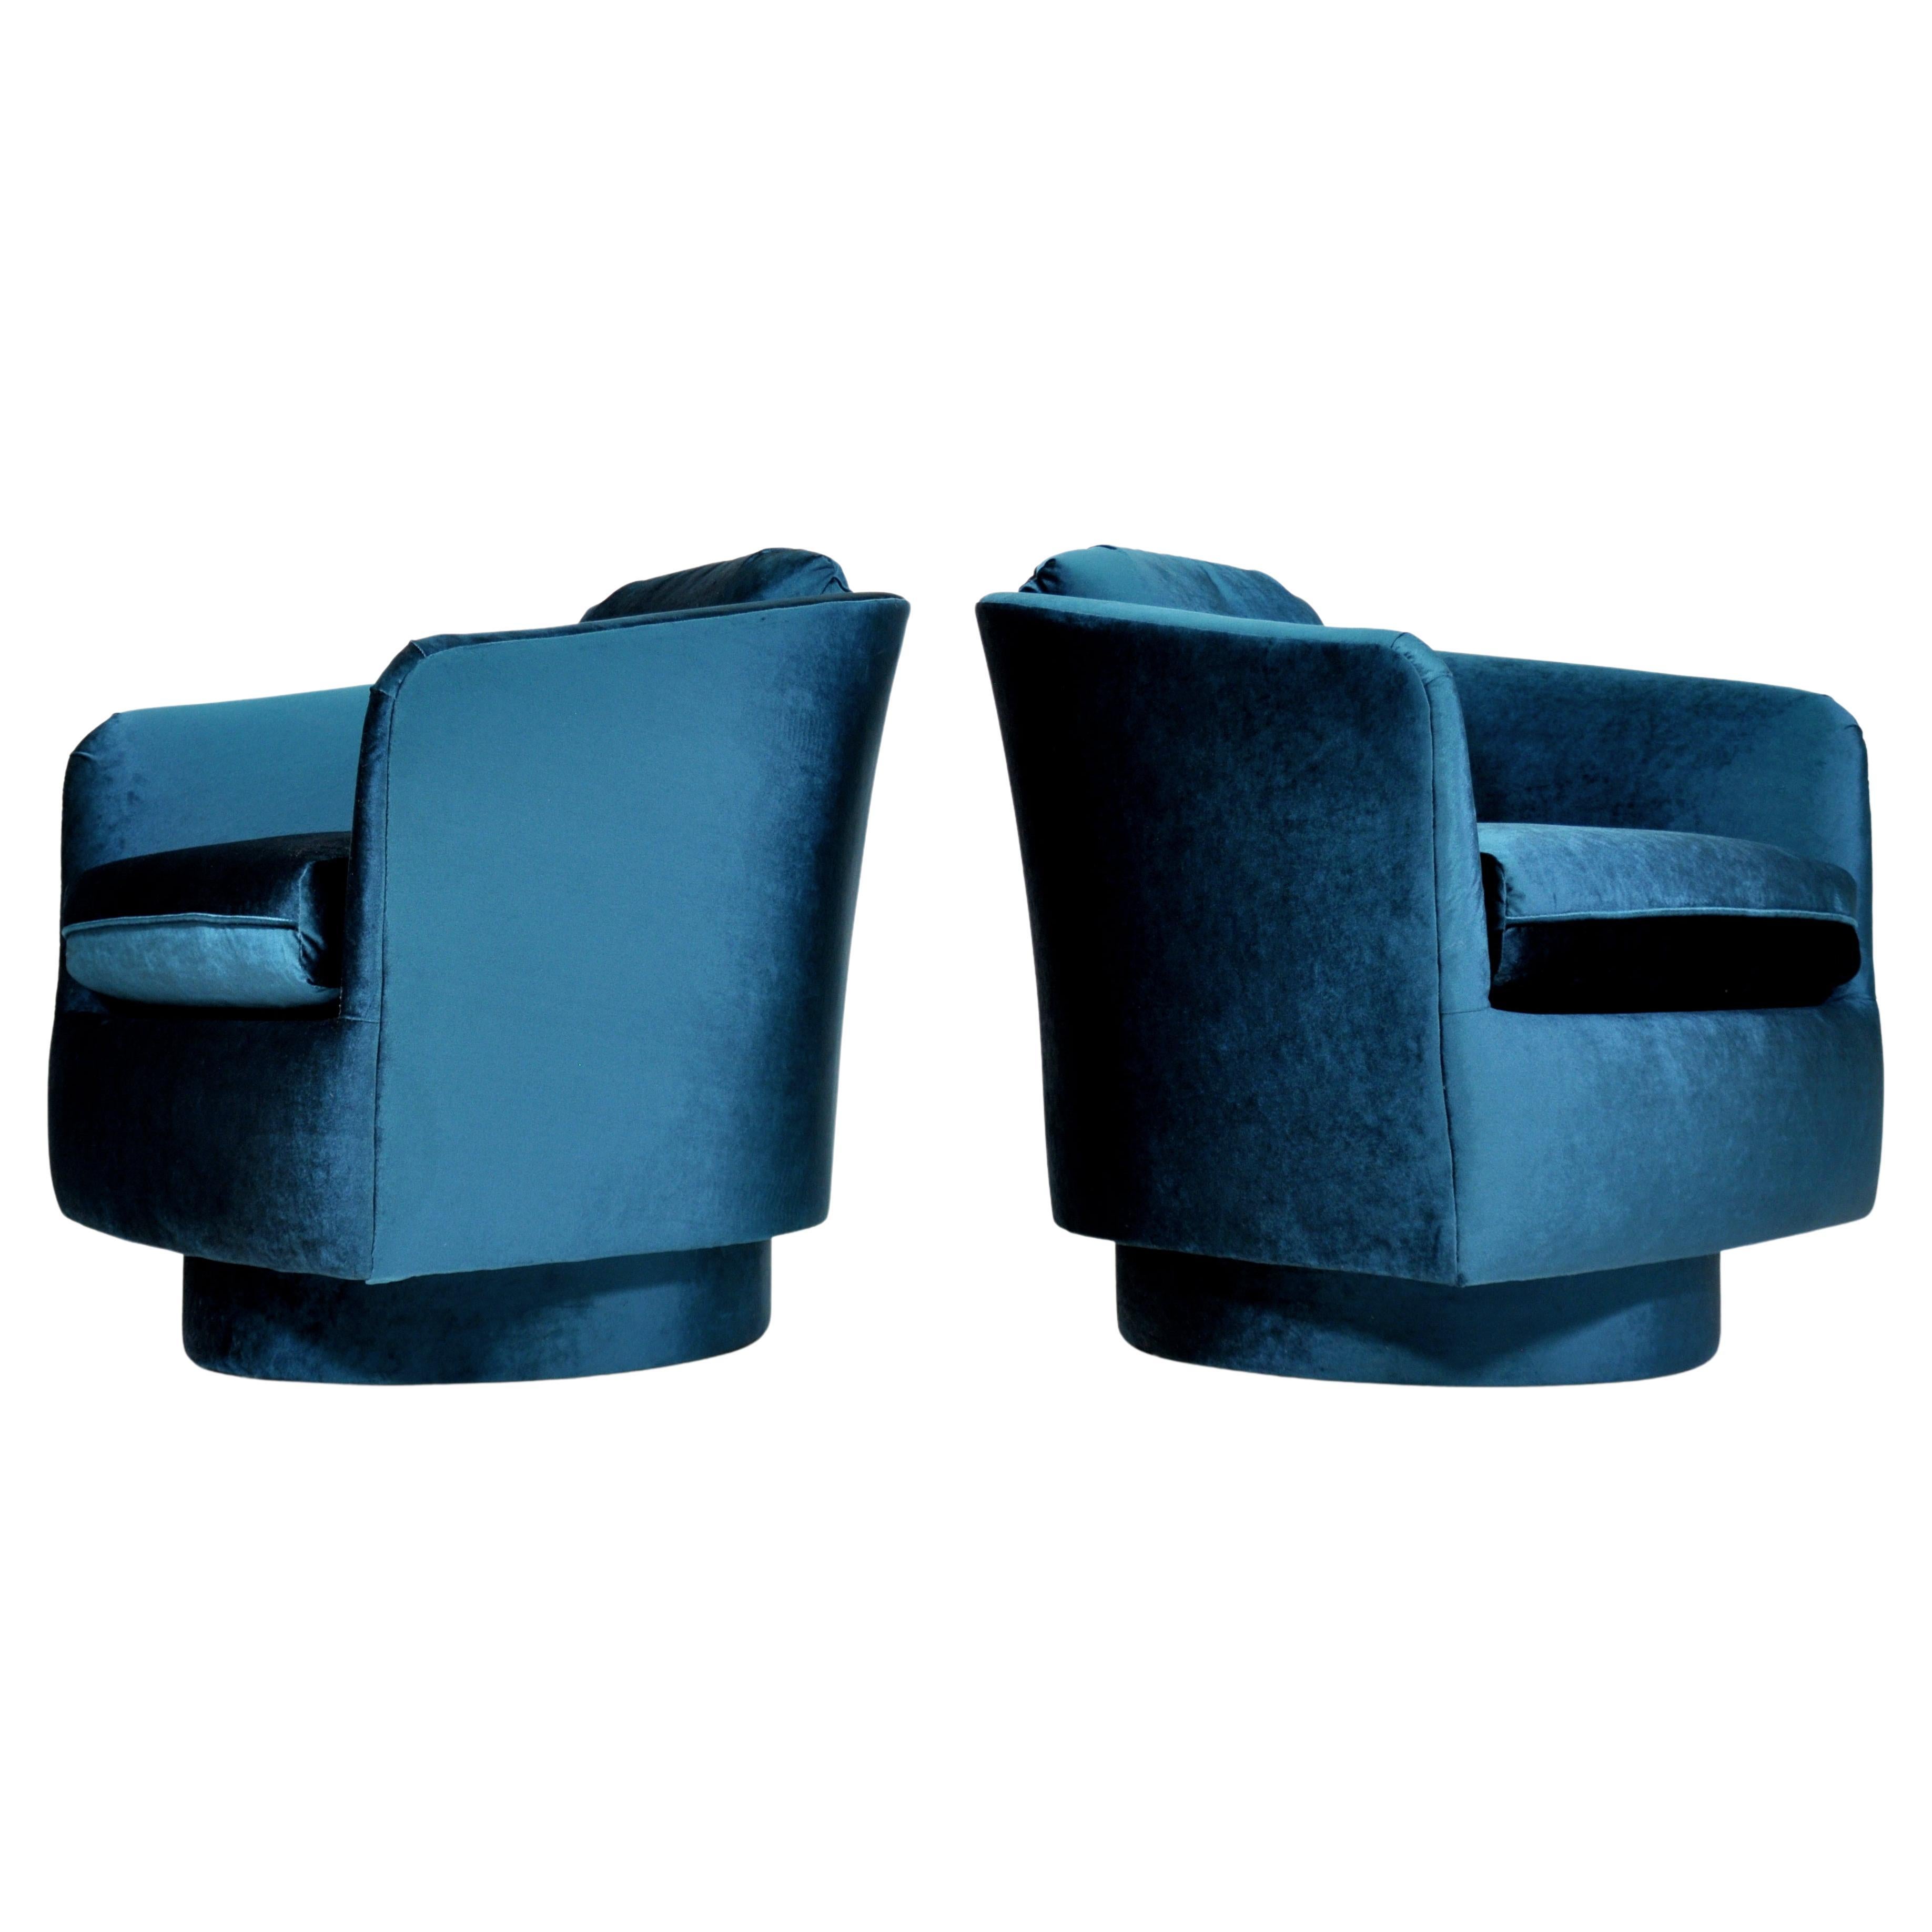 20th Century Pair of Mid-Century Blue Velvet Swivel Chairs, Milo Baughman Style, USA, 1970s